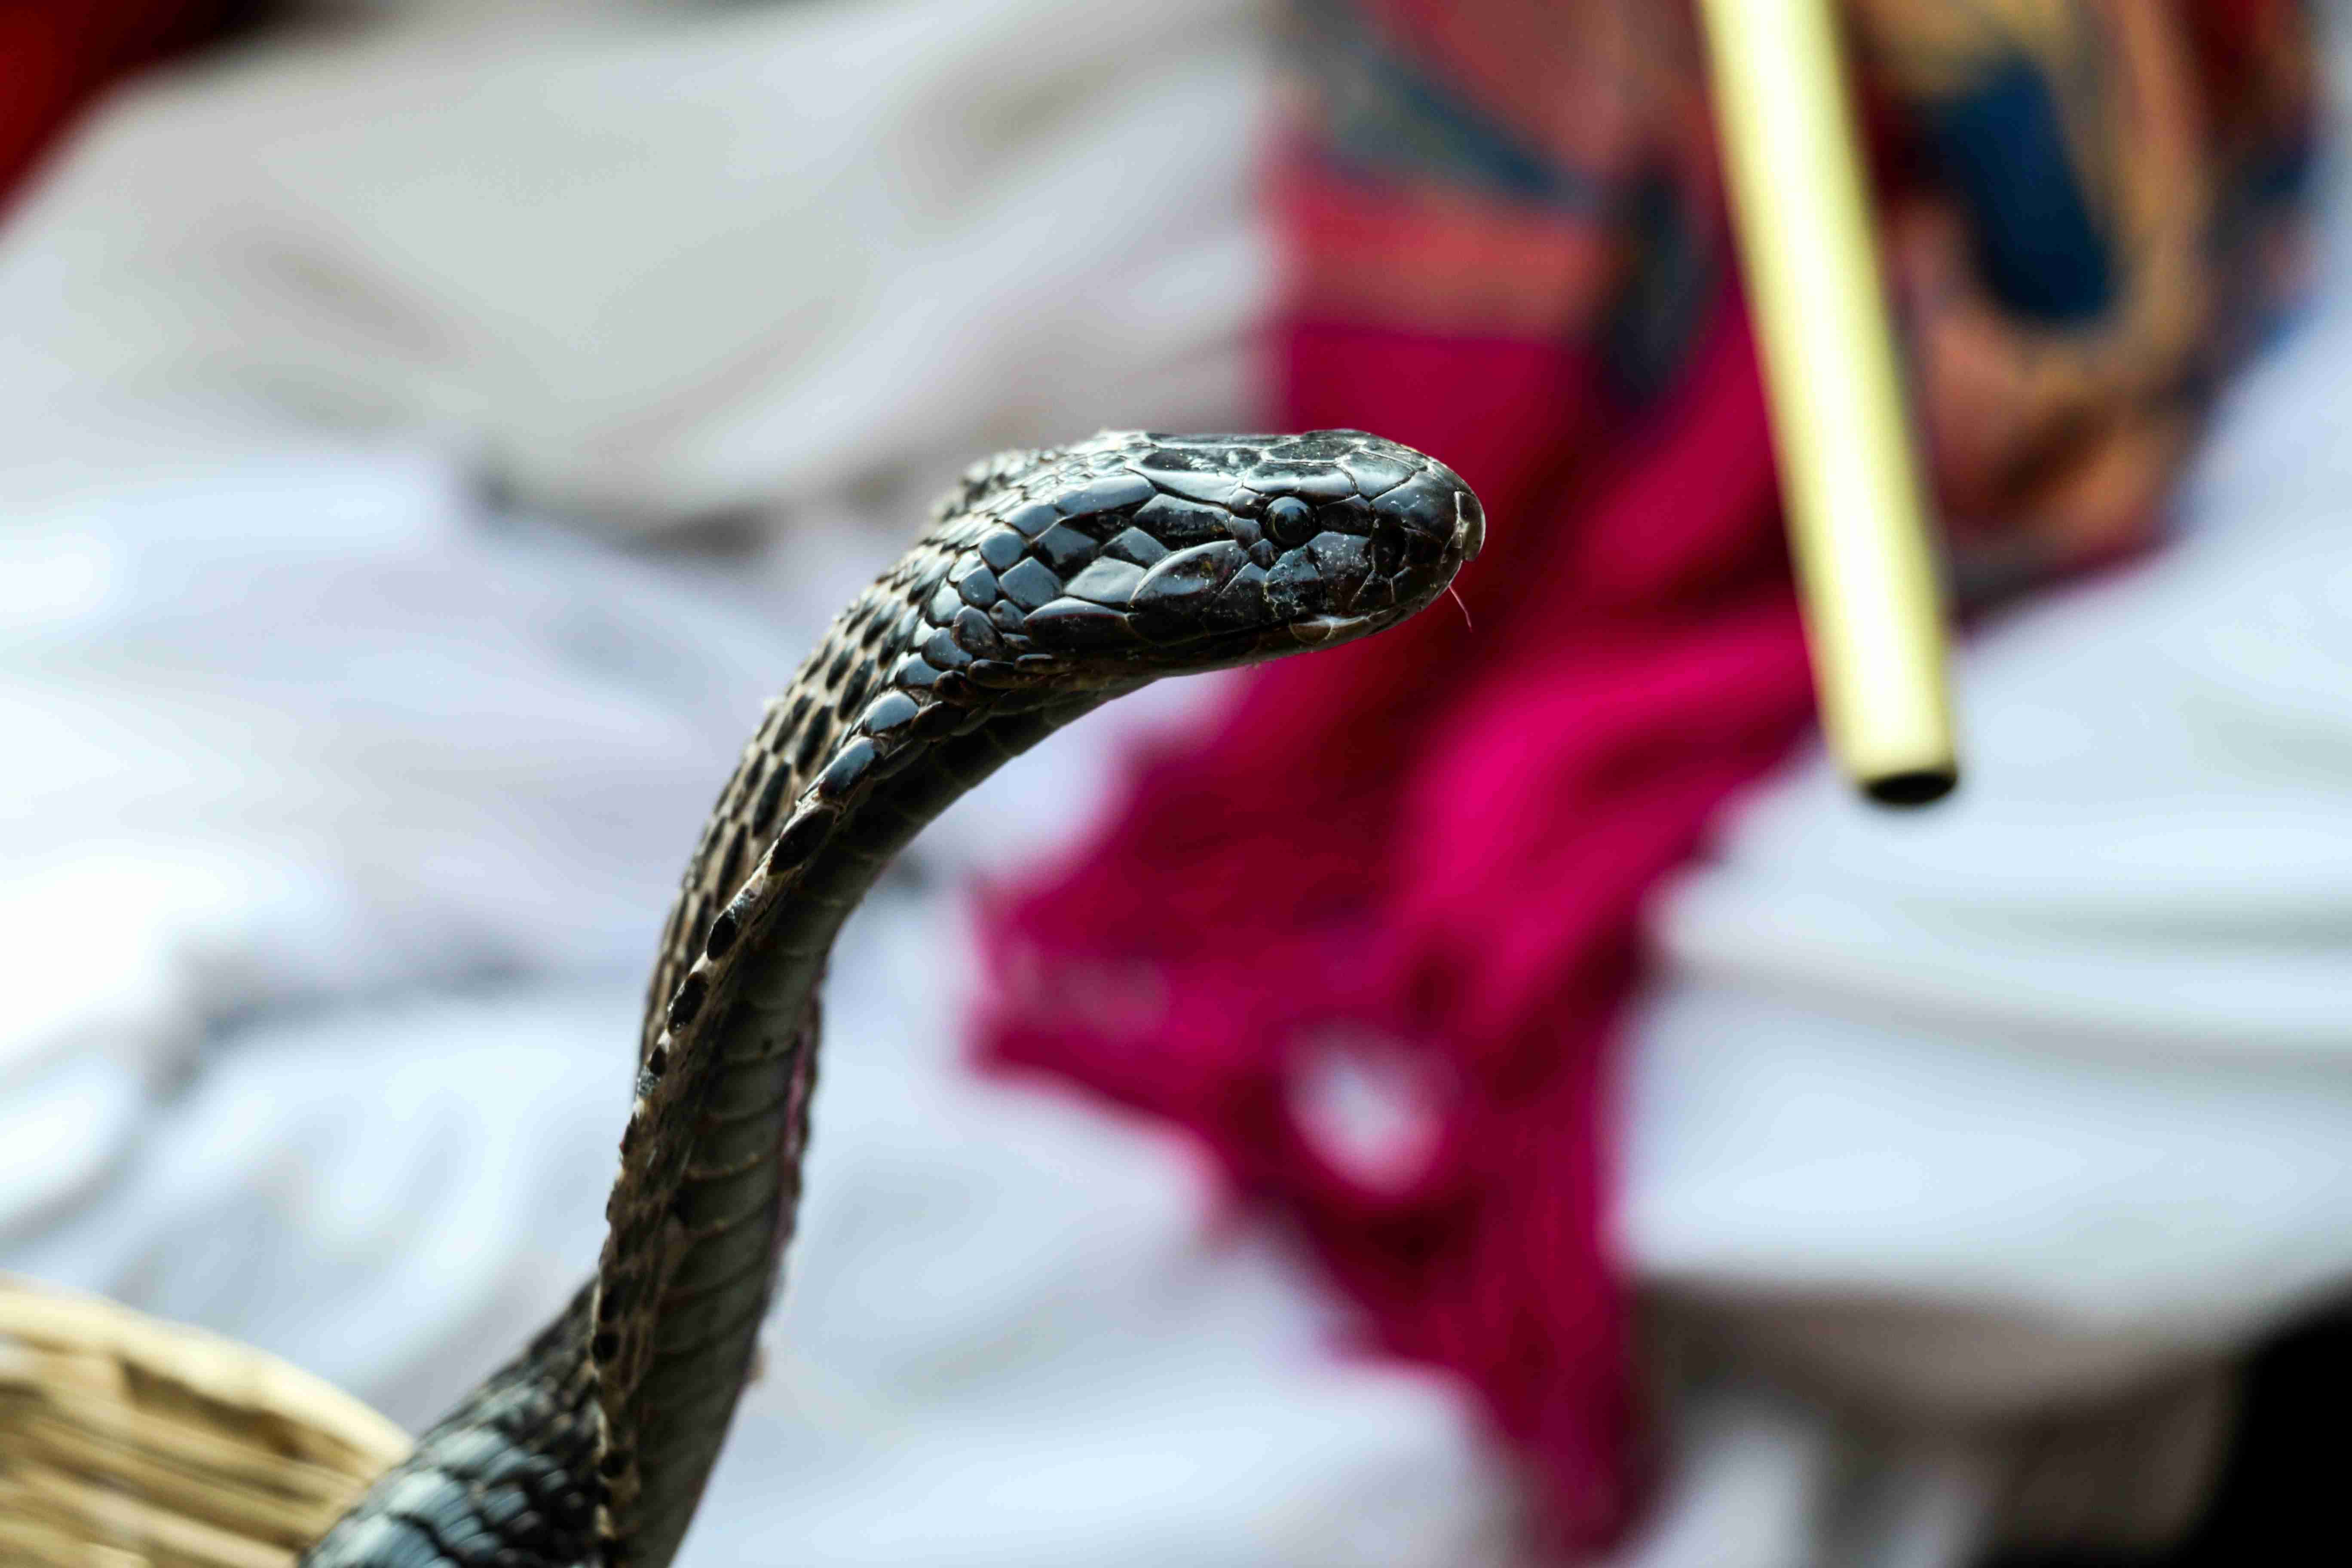 Ular kobra. Ilmuwan China menduga jika virus corona jenis baru menular dari ular ke manusia. (Foto:unsplash)